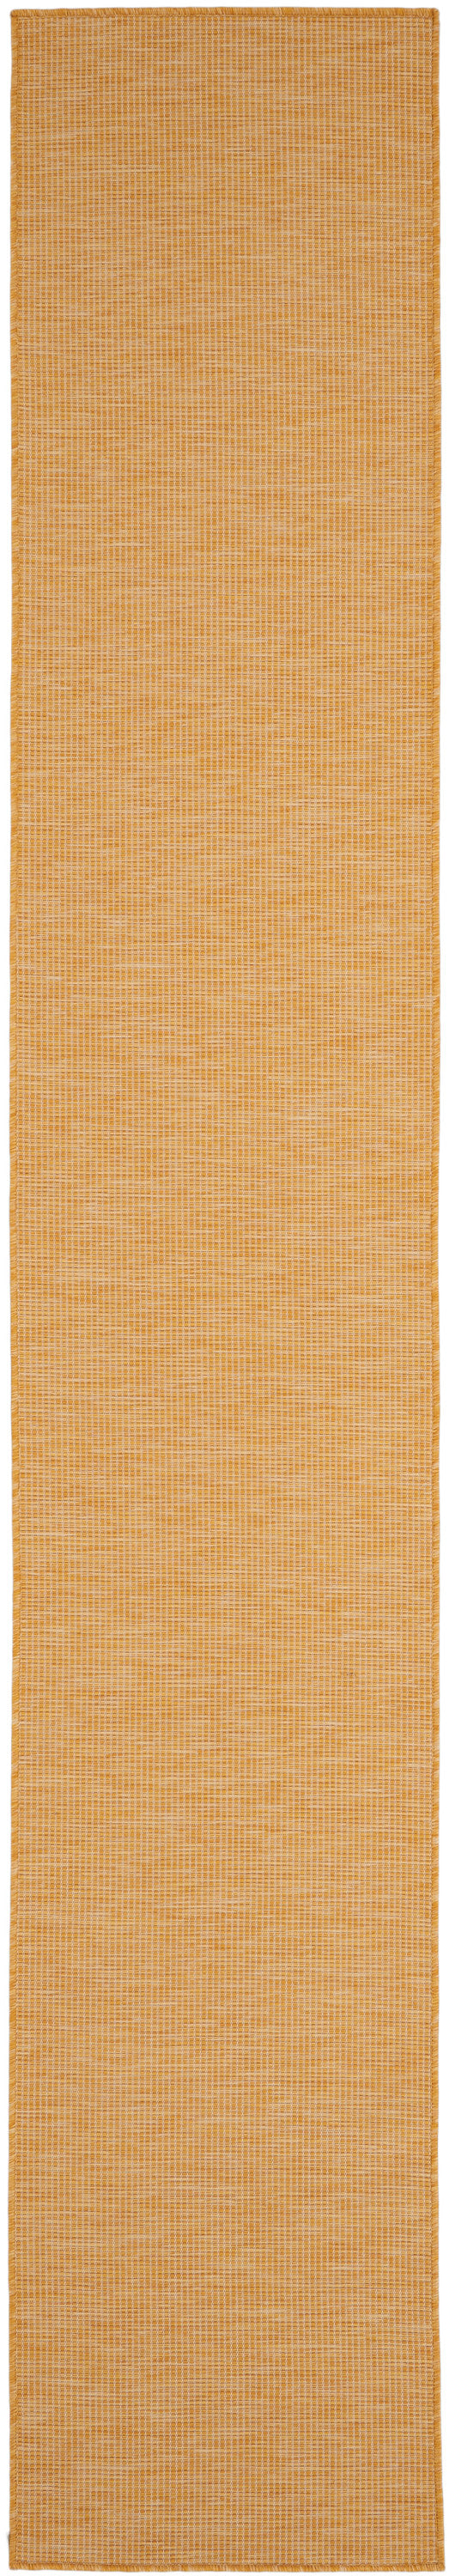 media image for positano yellow rug by nourison 99446842442 redo 3 246